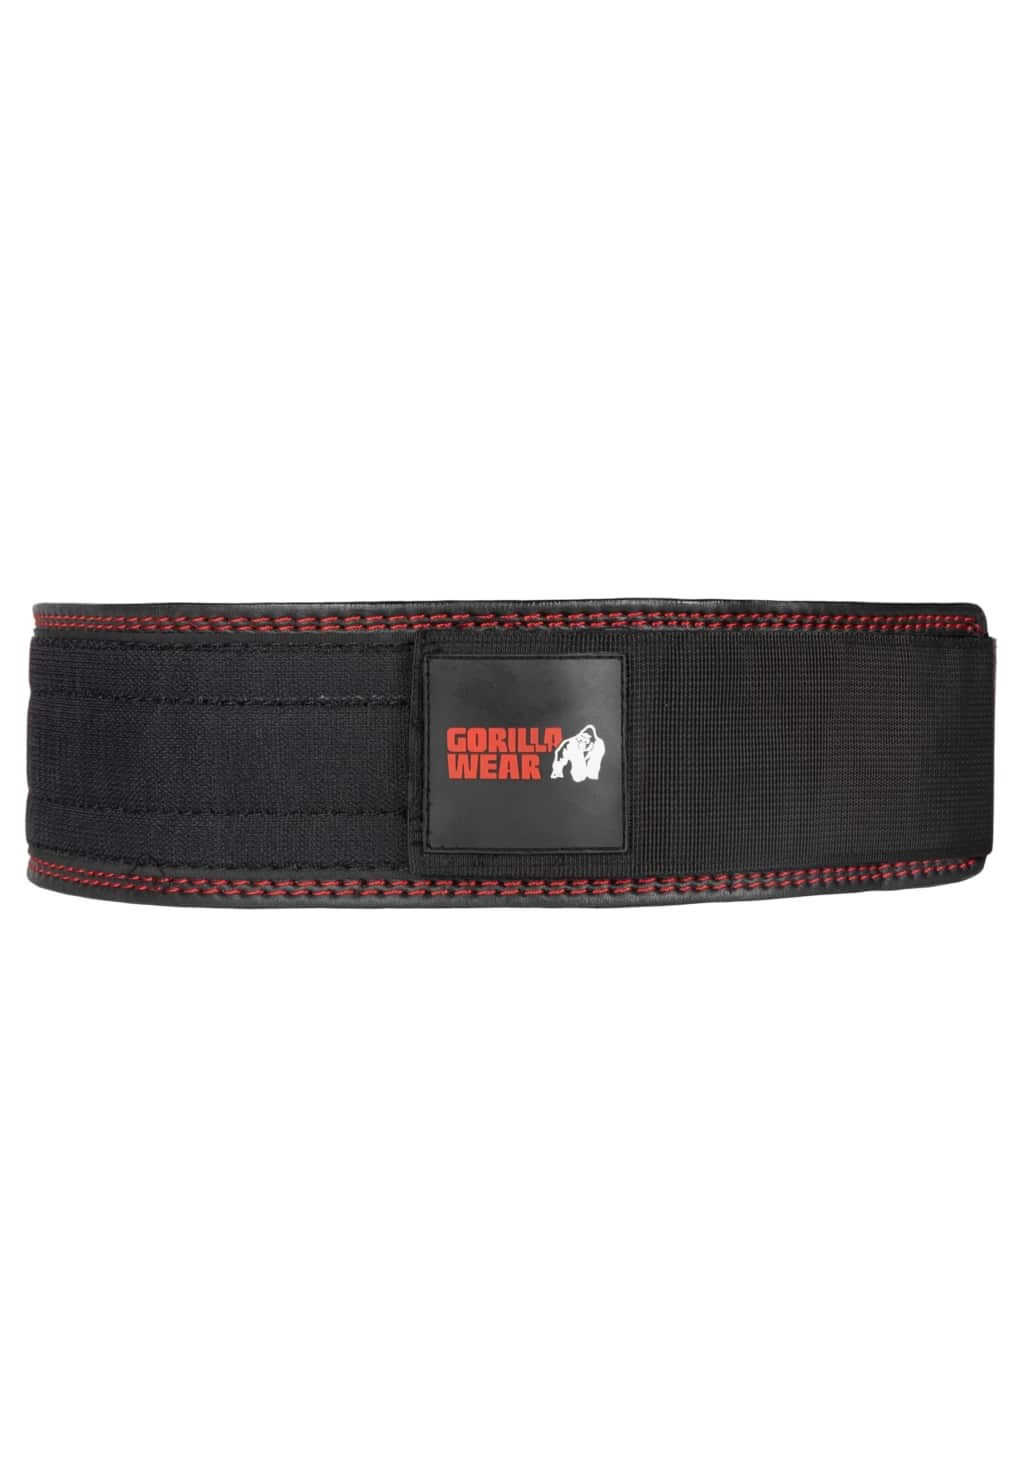 99231900 gorilla wear 4 inch premium leather lifting belt 6